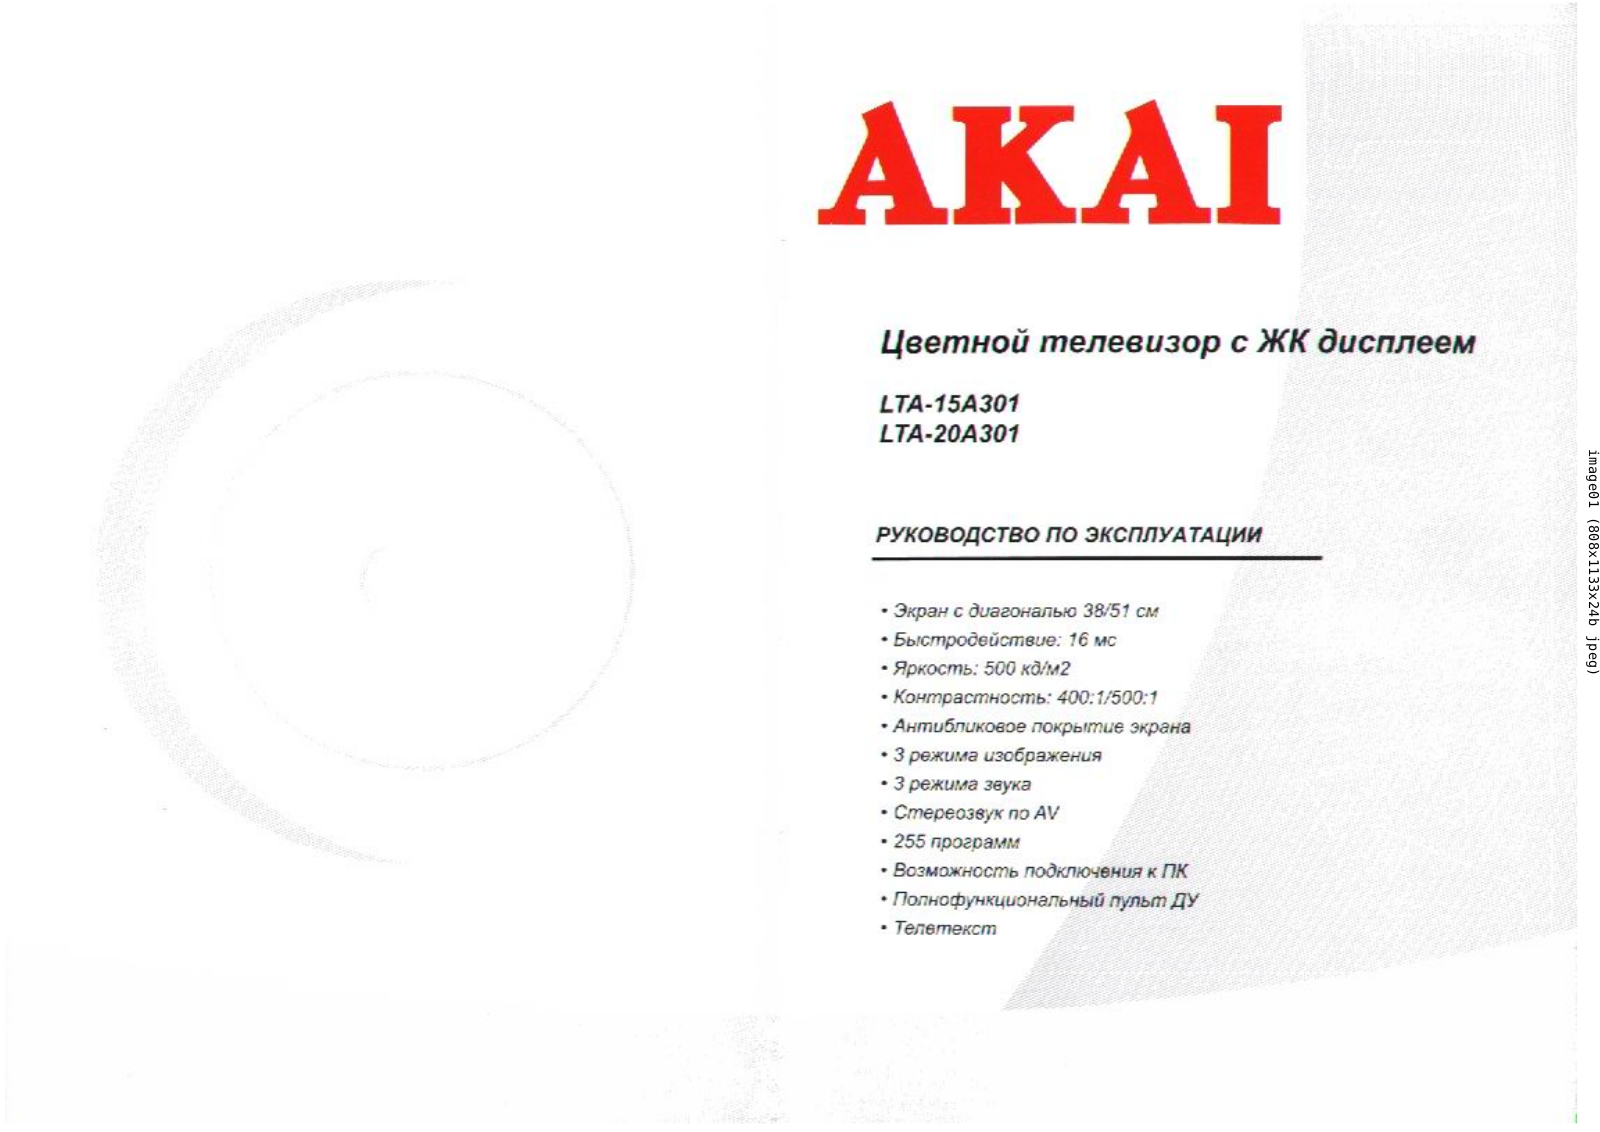 Akai LTA-20 A301 User Manual